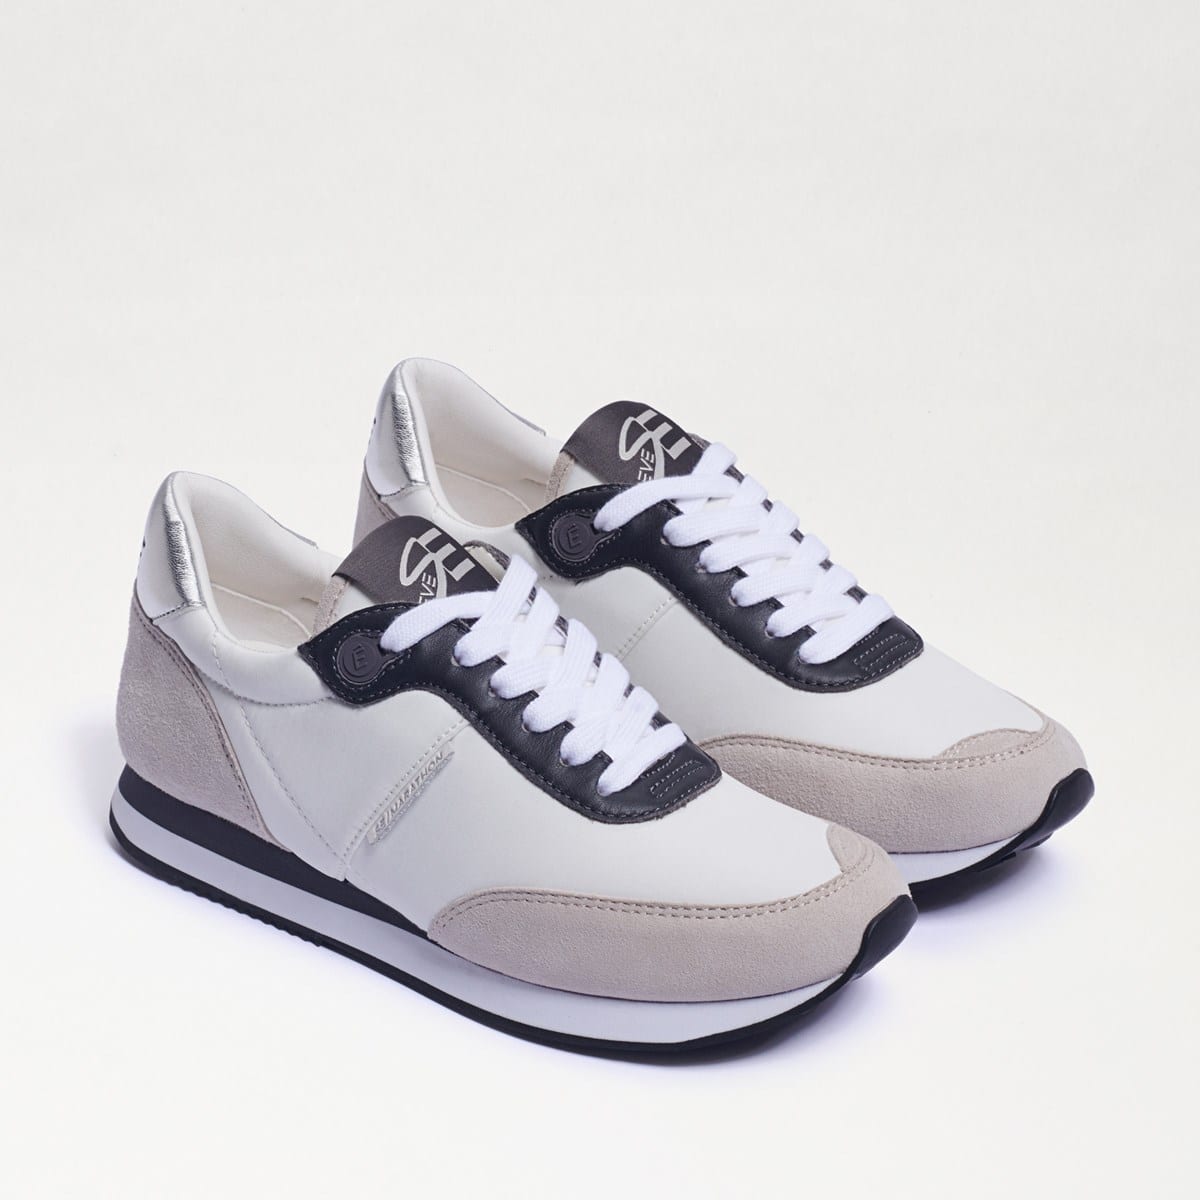 Sam Edelman Tori Sneaker Bright White/Moonlight Grey 32HG4Xm4